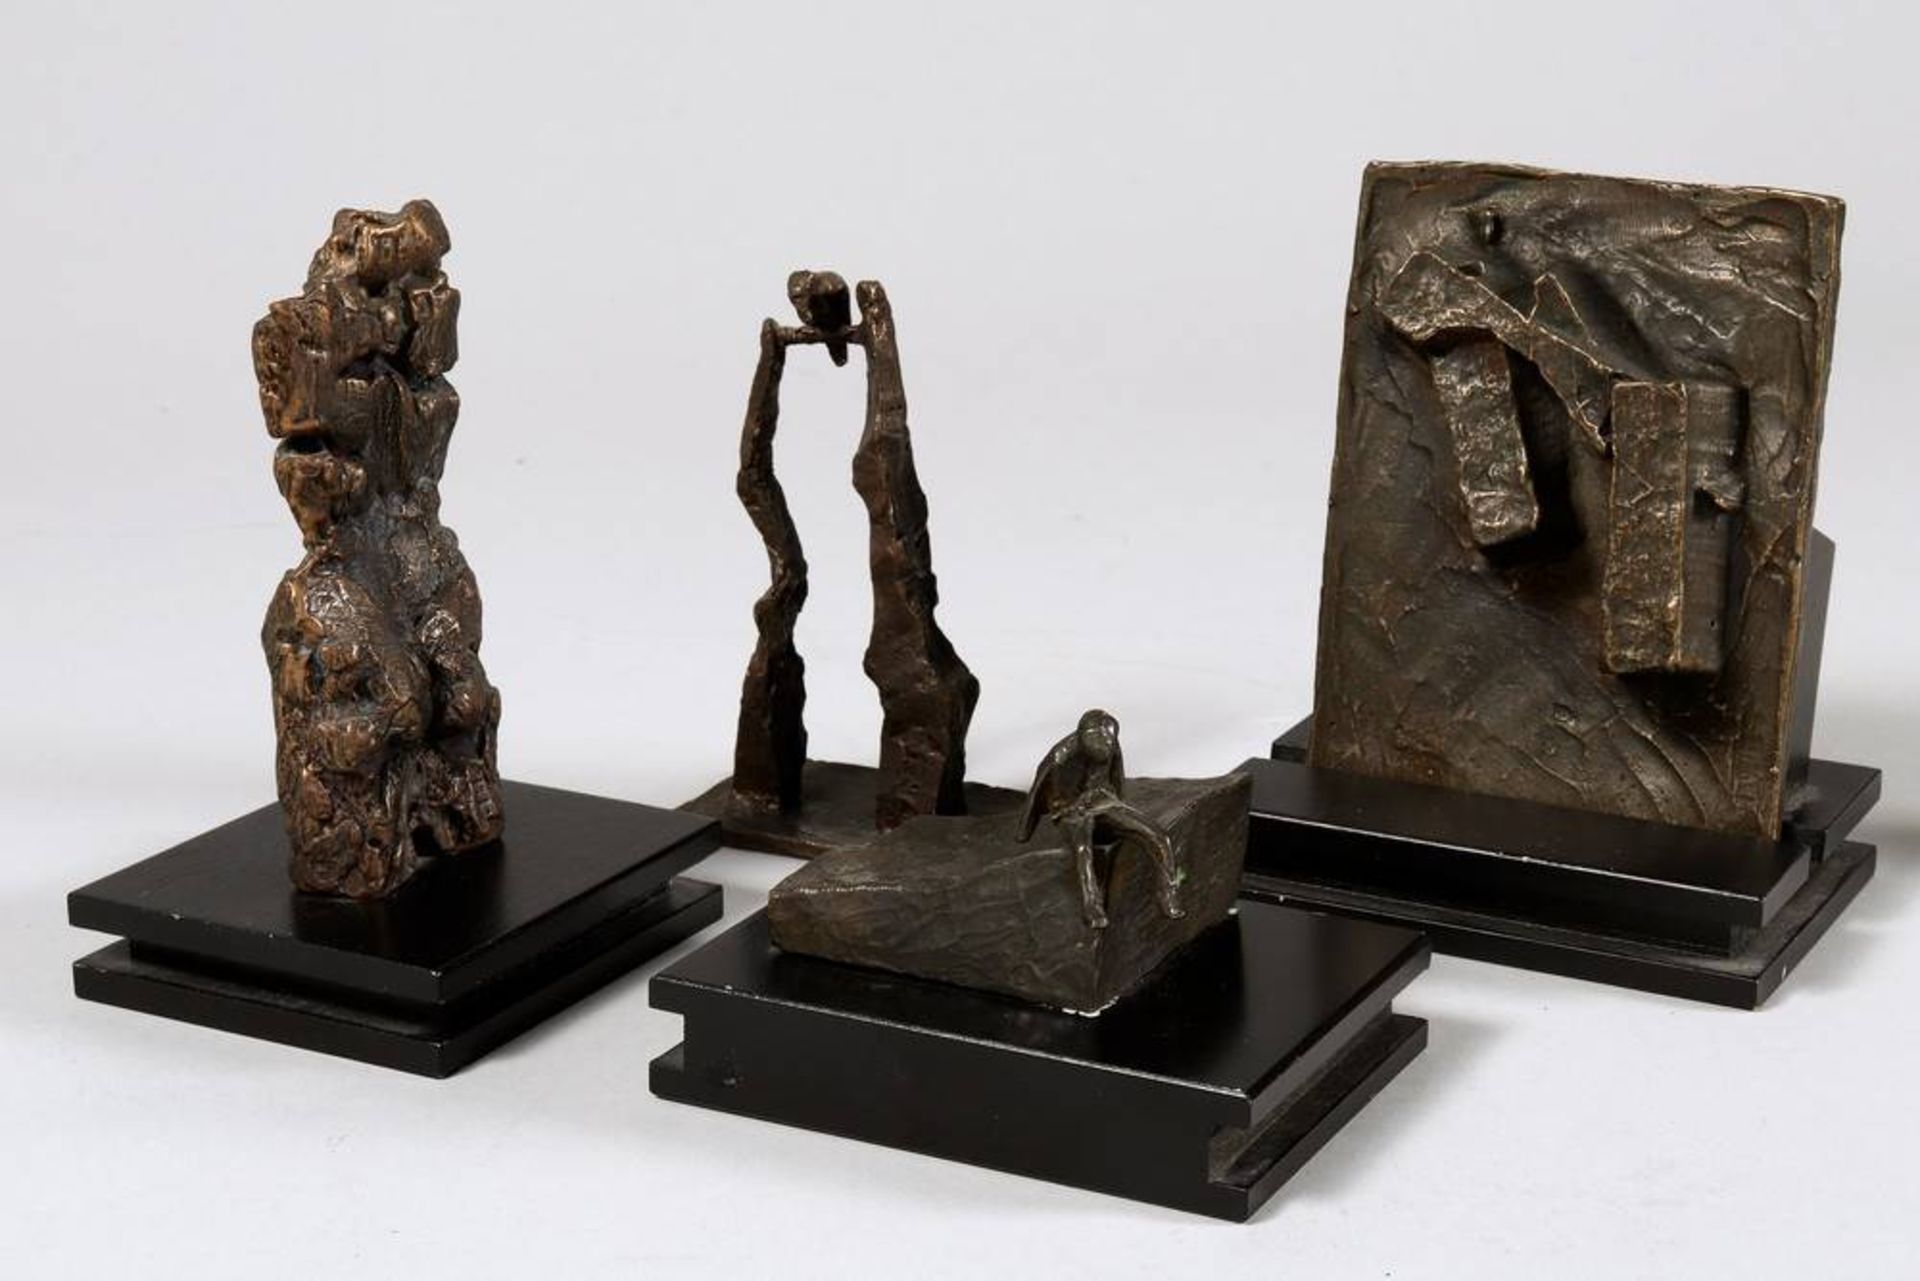 4 small sculptures